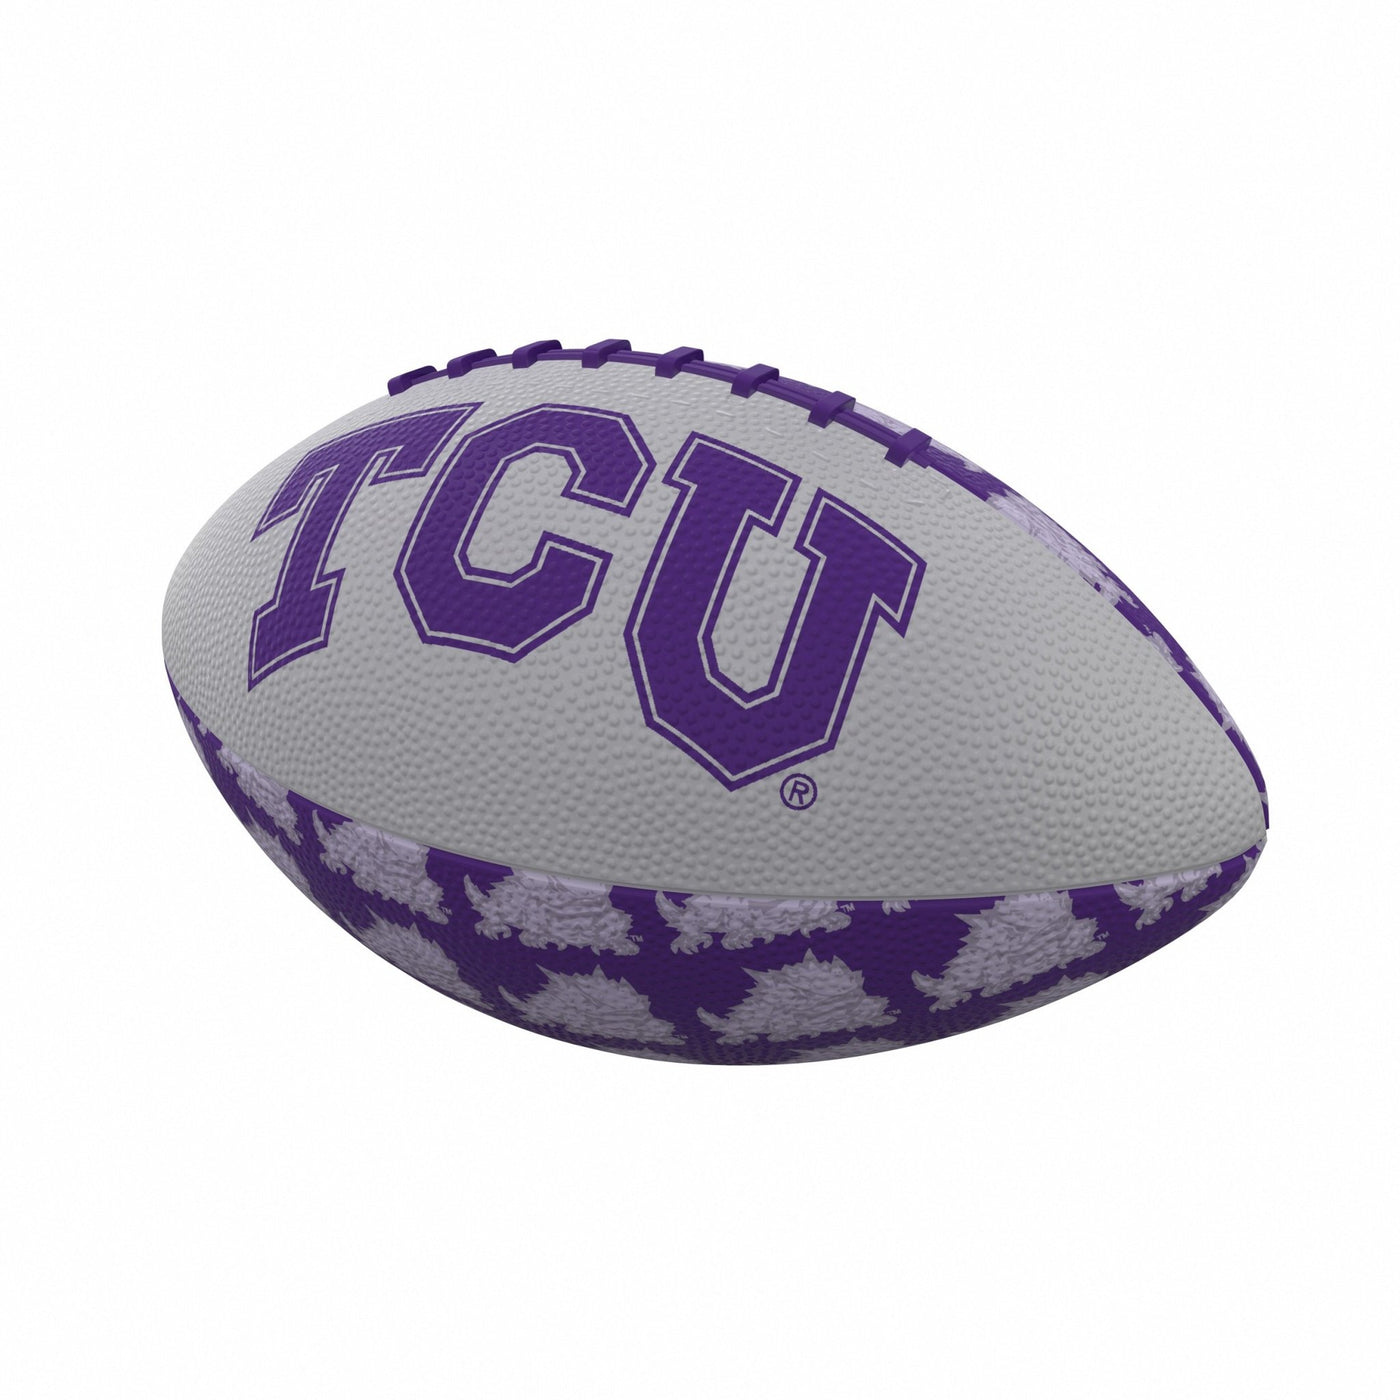 TCU Repeating Mini-Size Rubber Football - Logo Brands